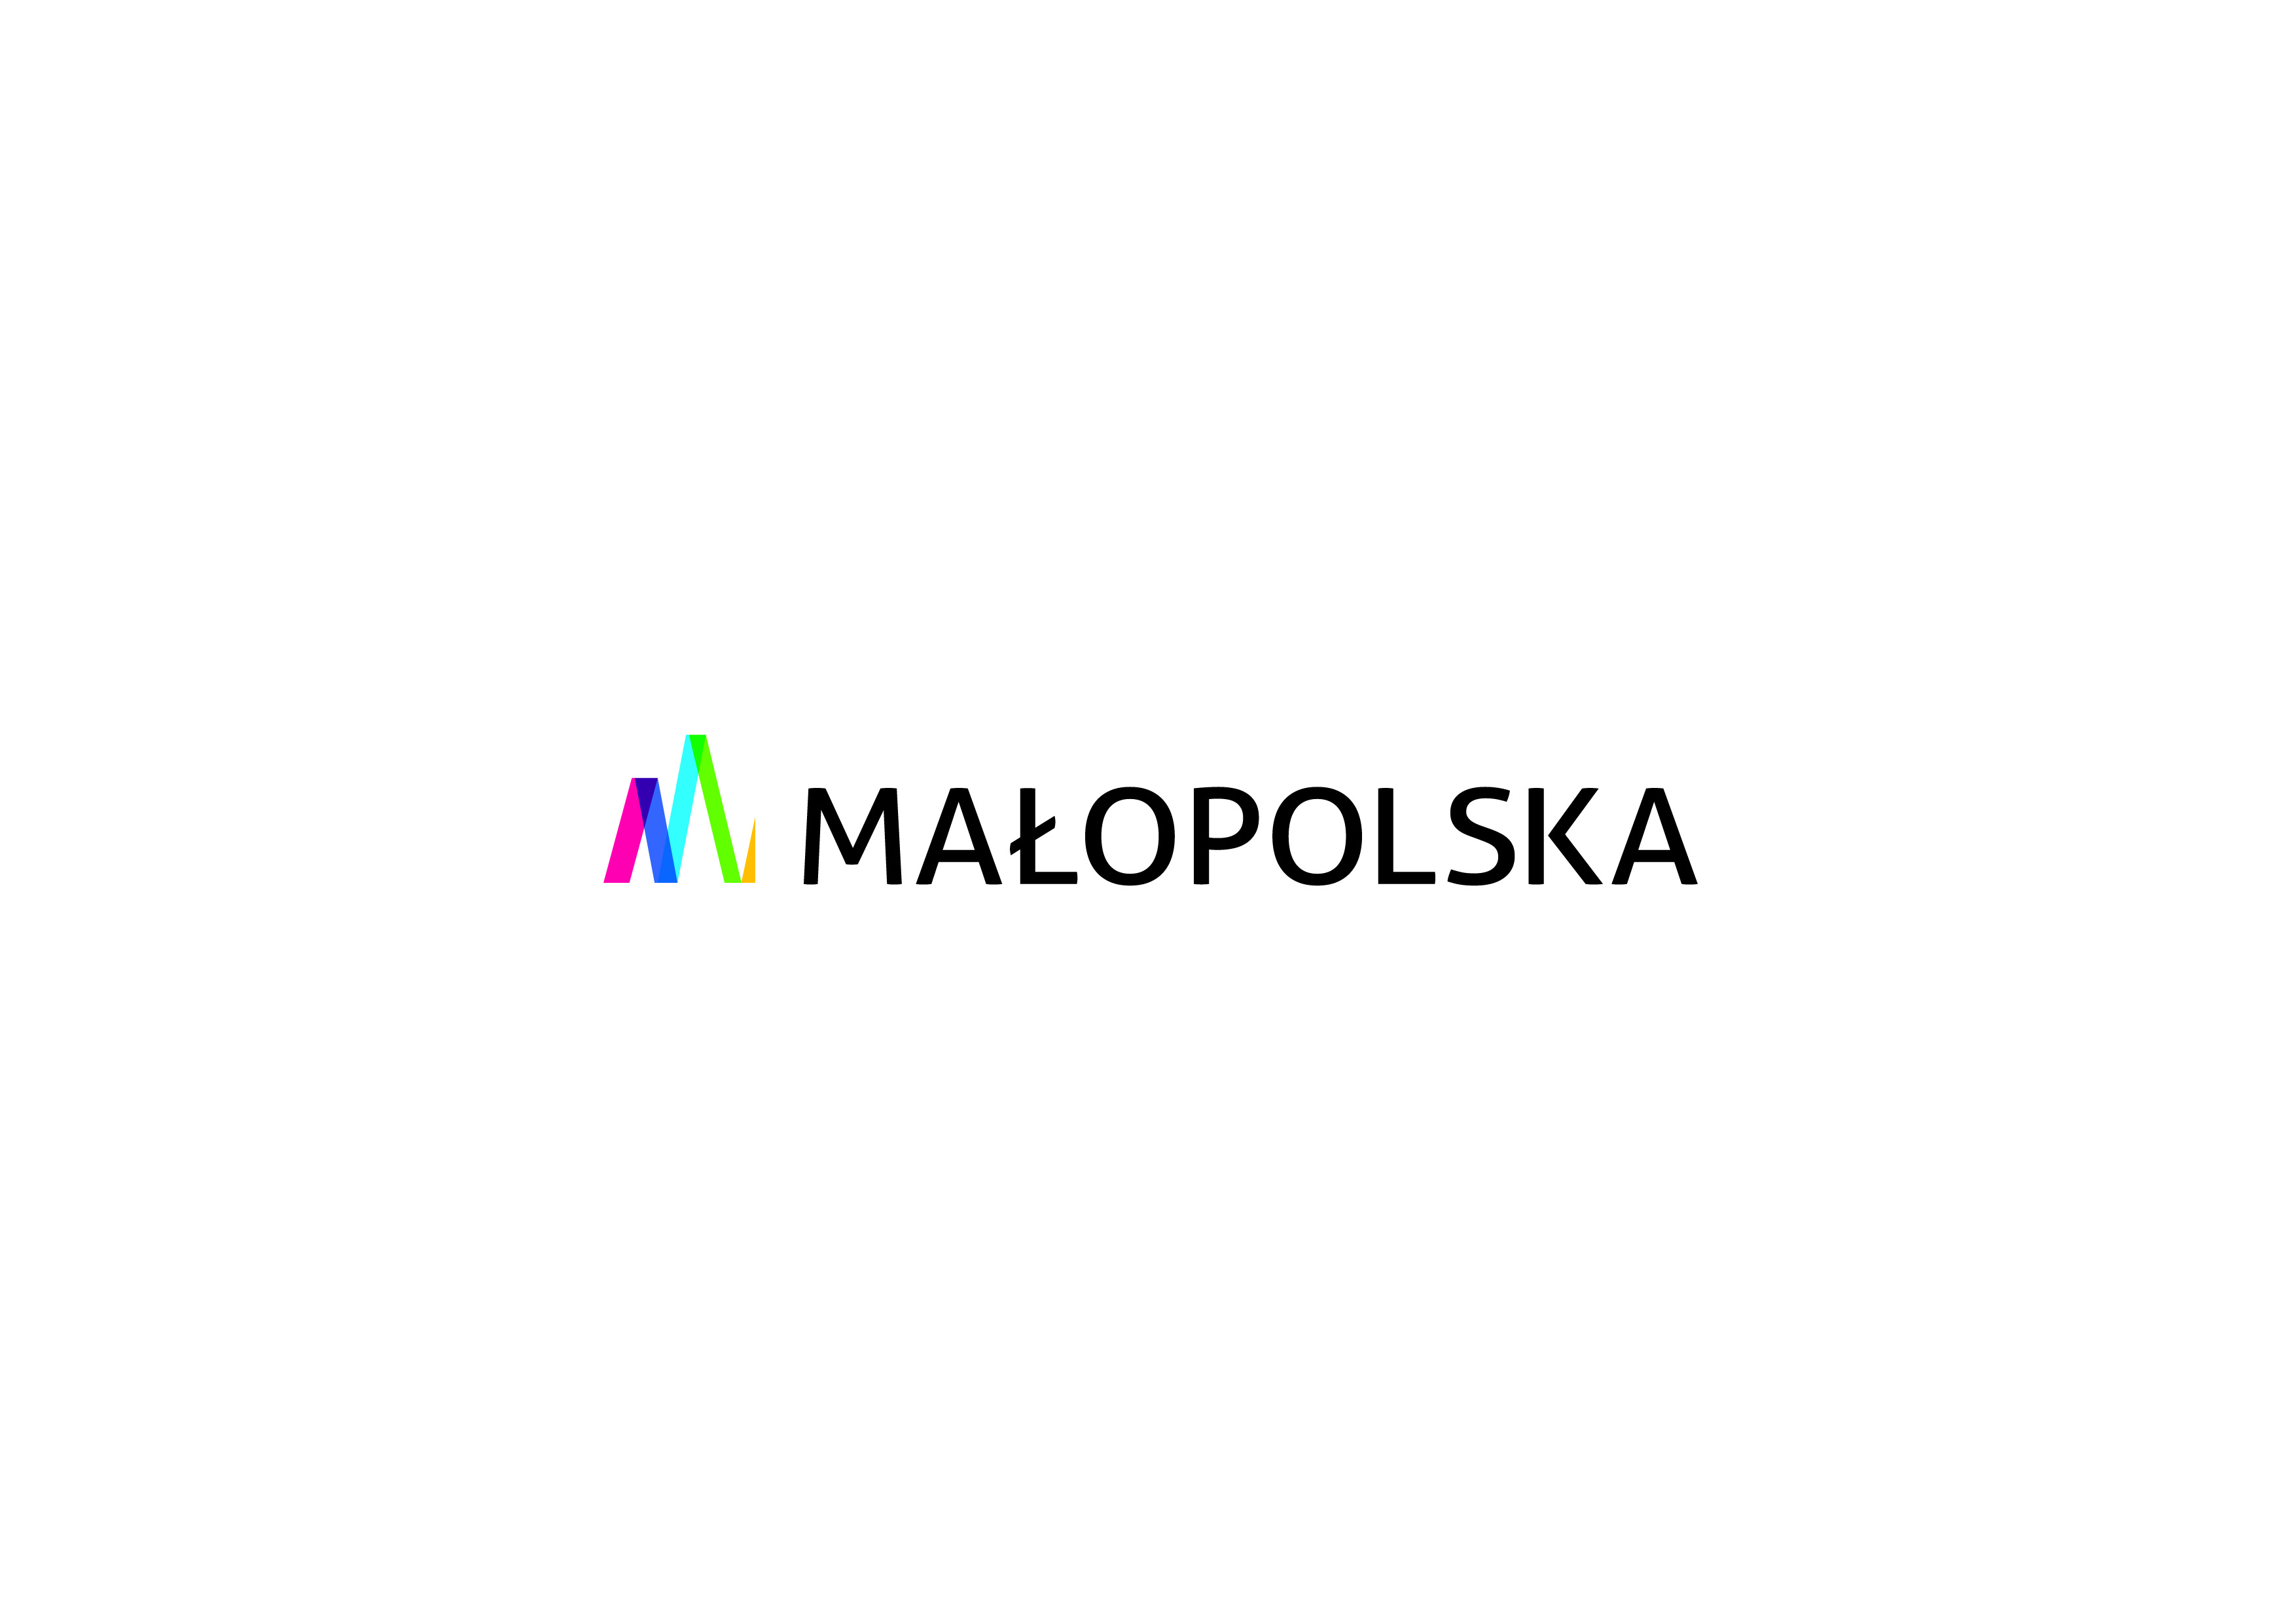 http://gminalipinki.pl/files/fck/Image/loga/Logo-Malopolska-V-RGB.png